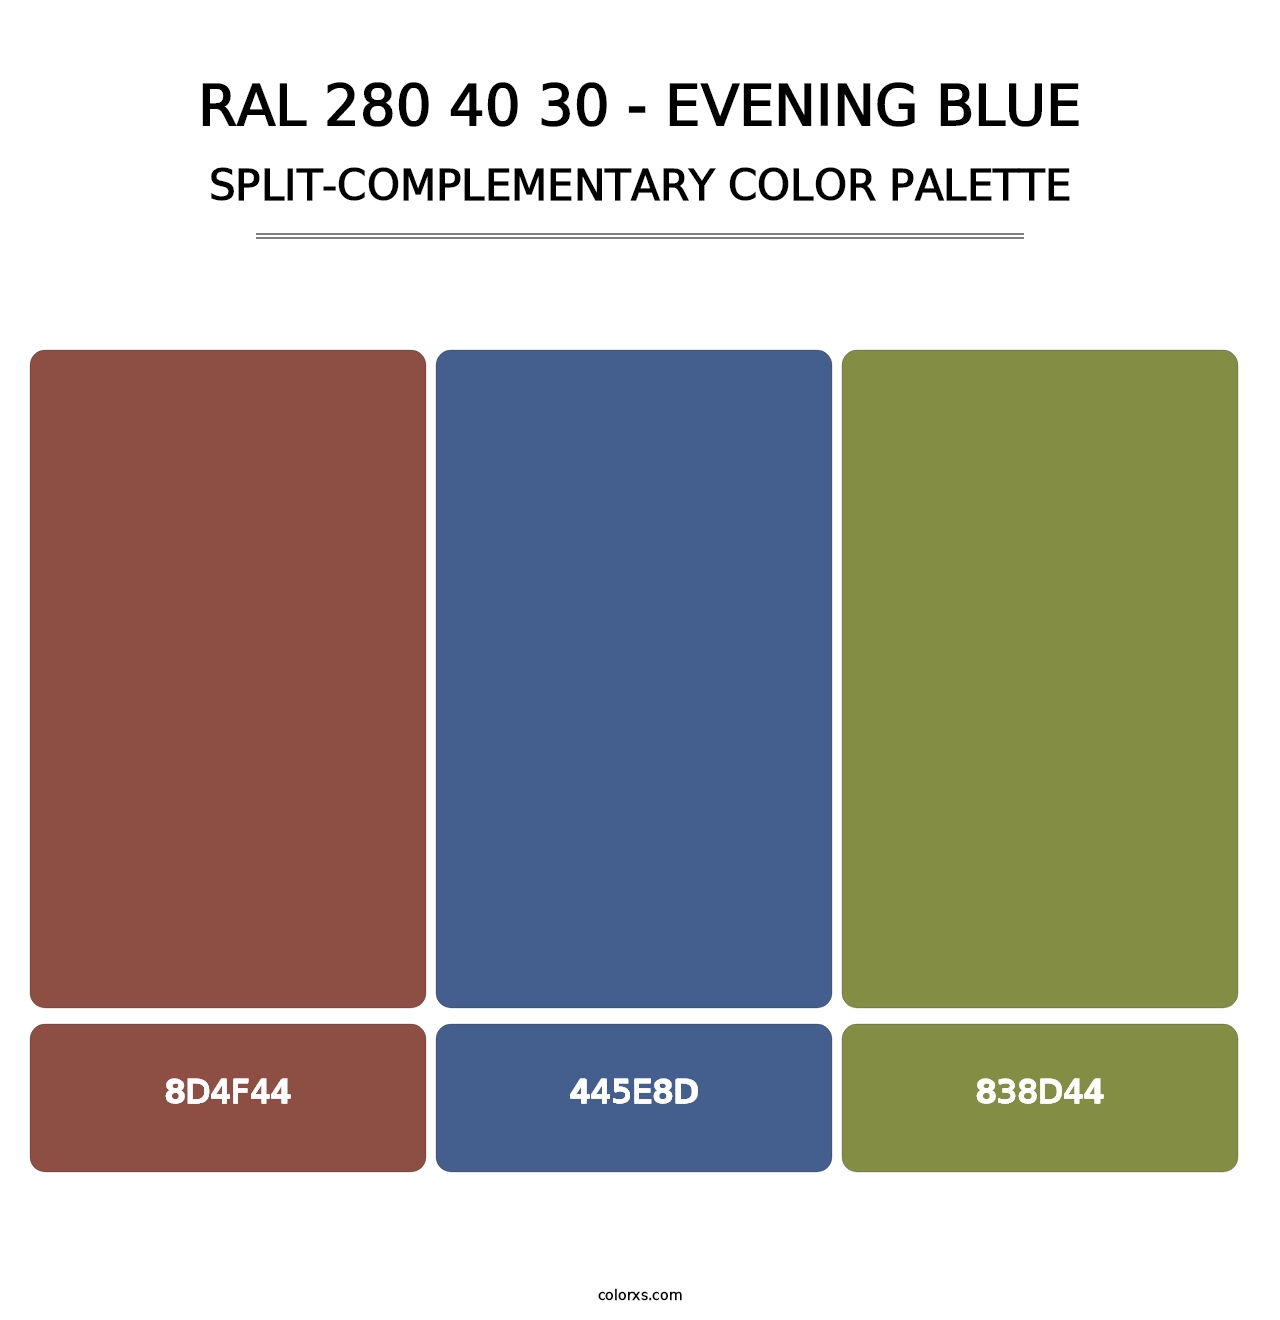 RAL 280 40 30 - Evening Blue - Split-Complementary Color Palette